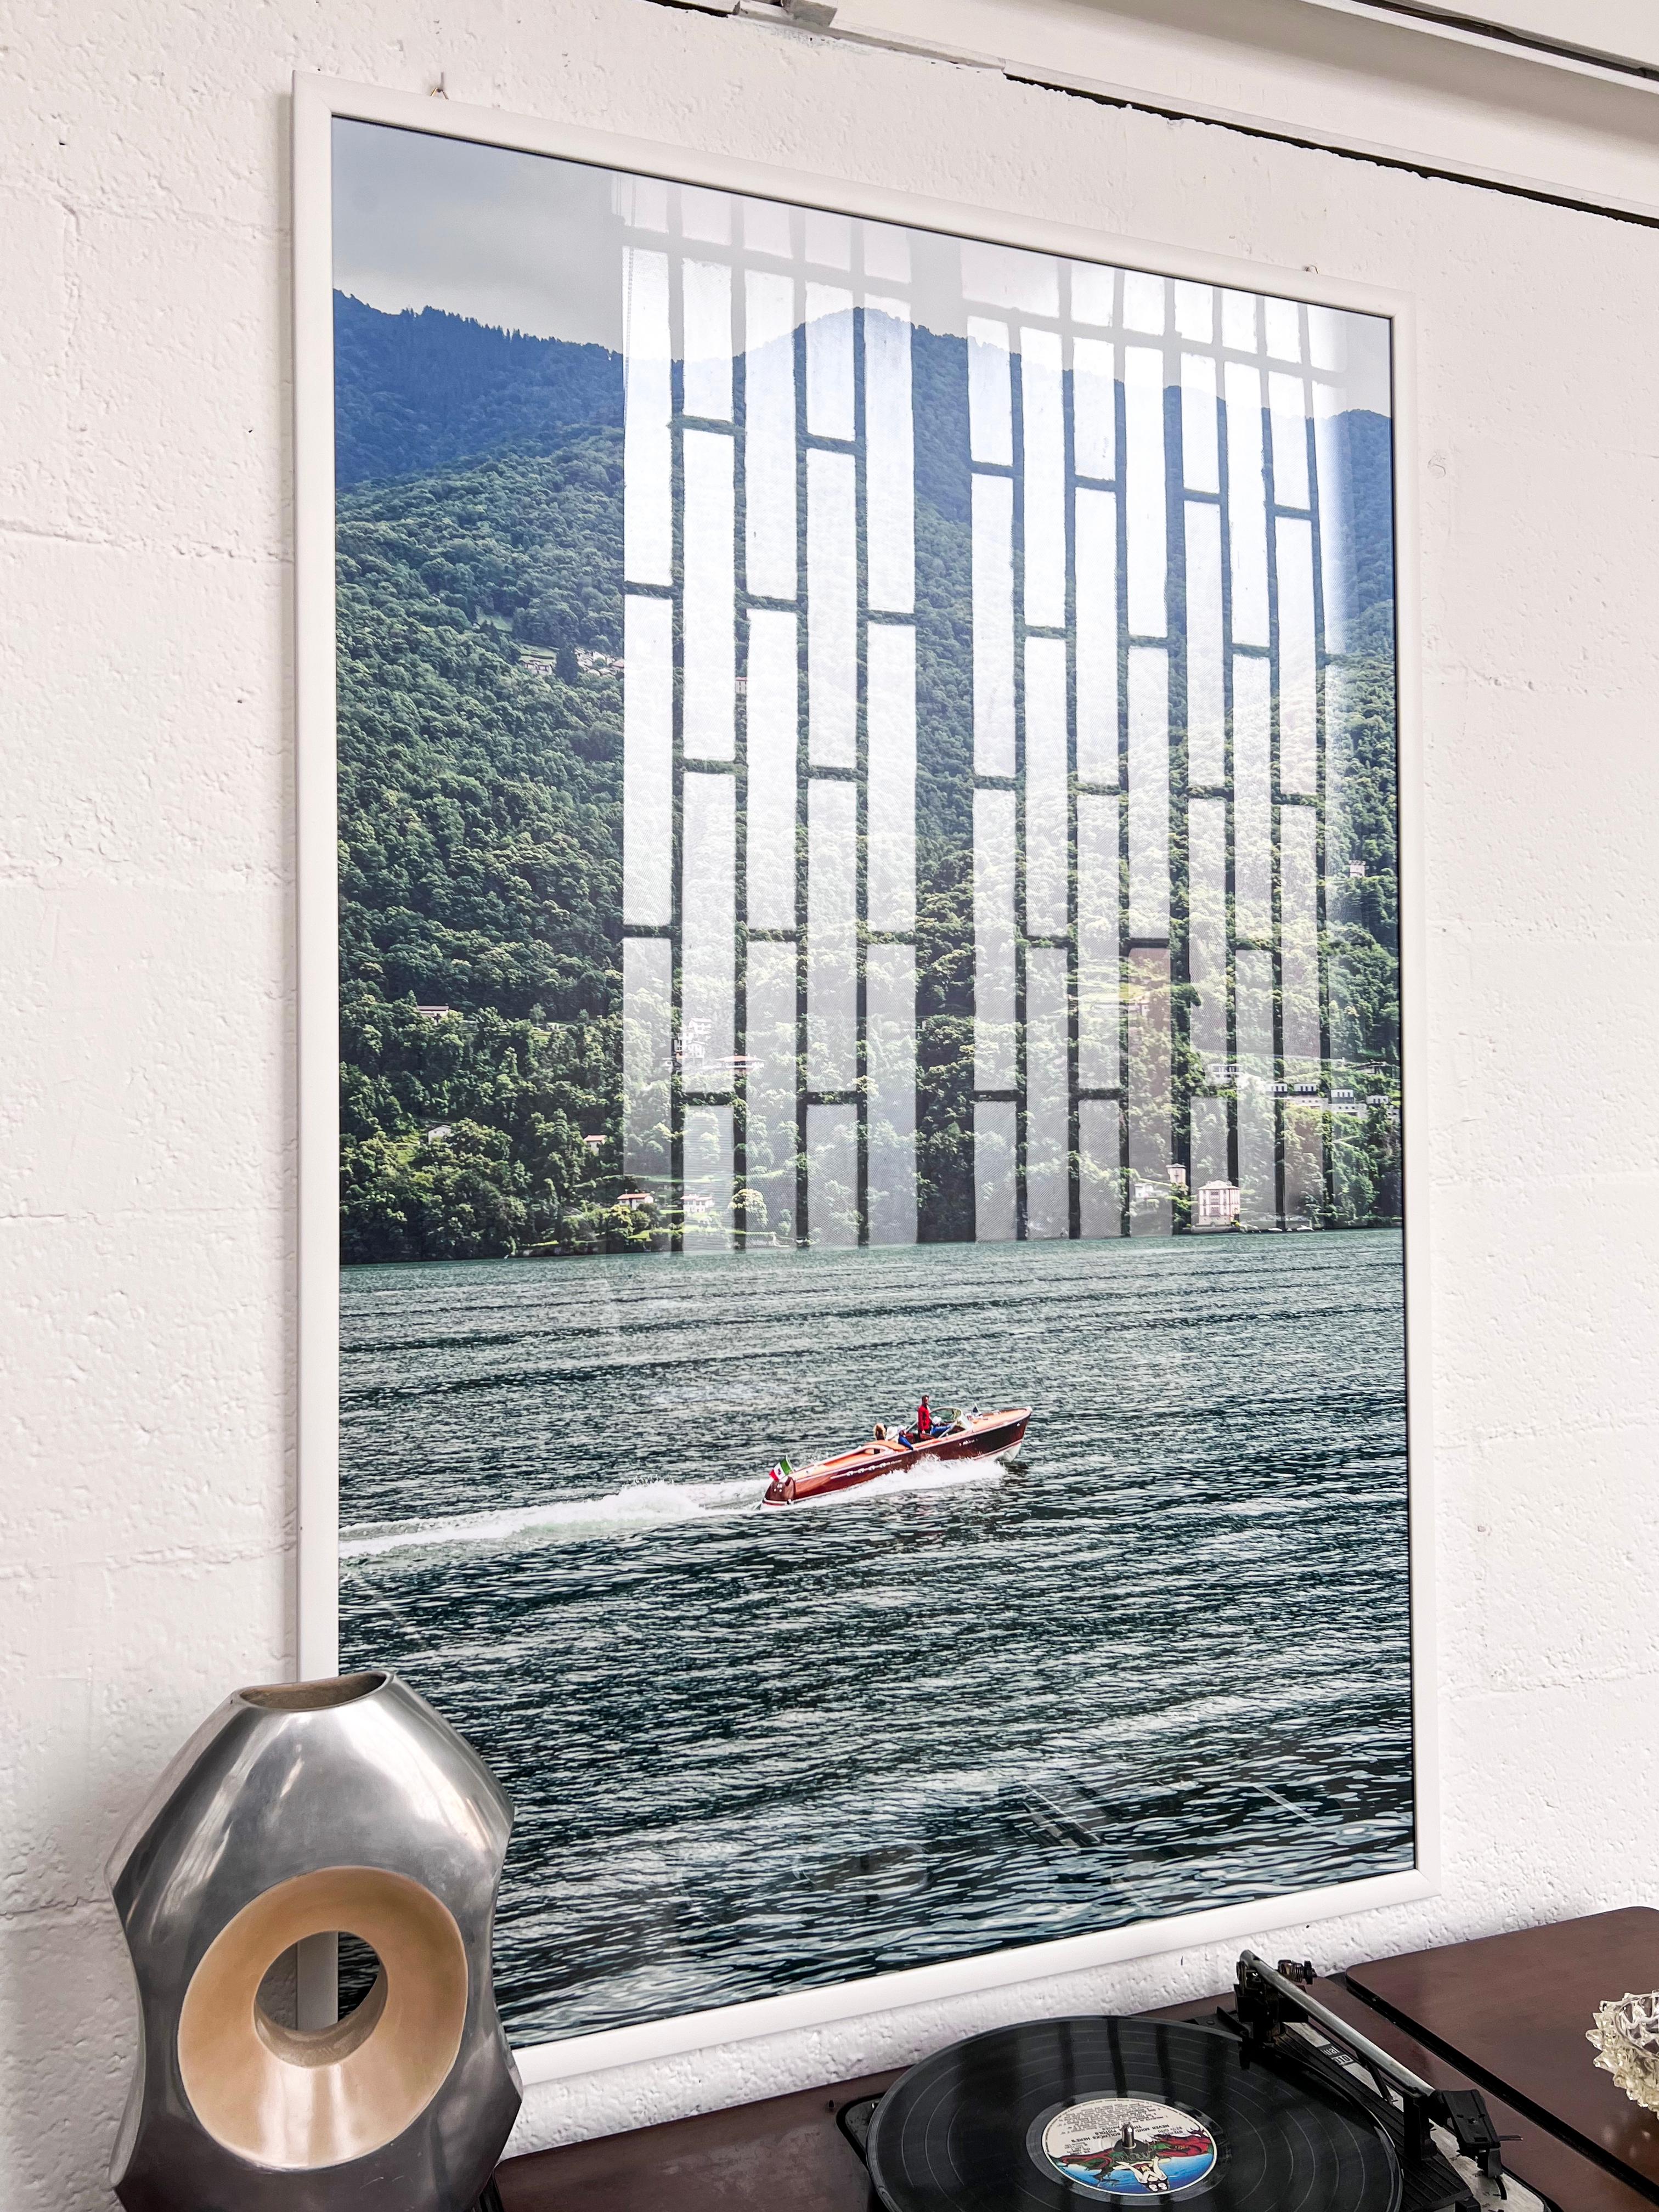 Contemporary Riva Aquarama on Lake Como Art Print by Spinzi, Italian Dolcevita For Sale